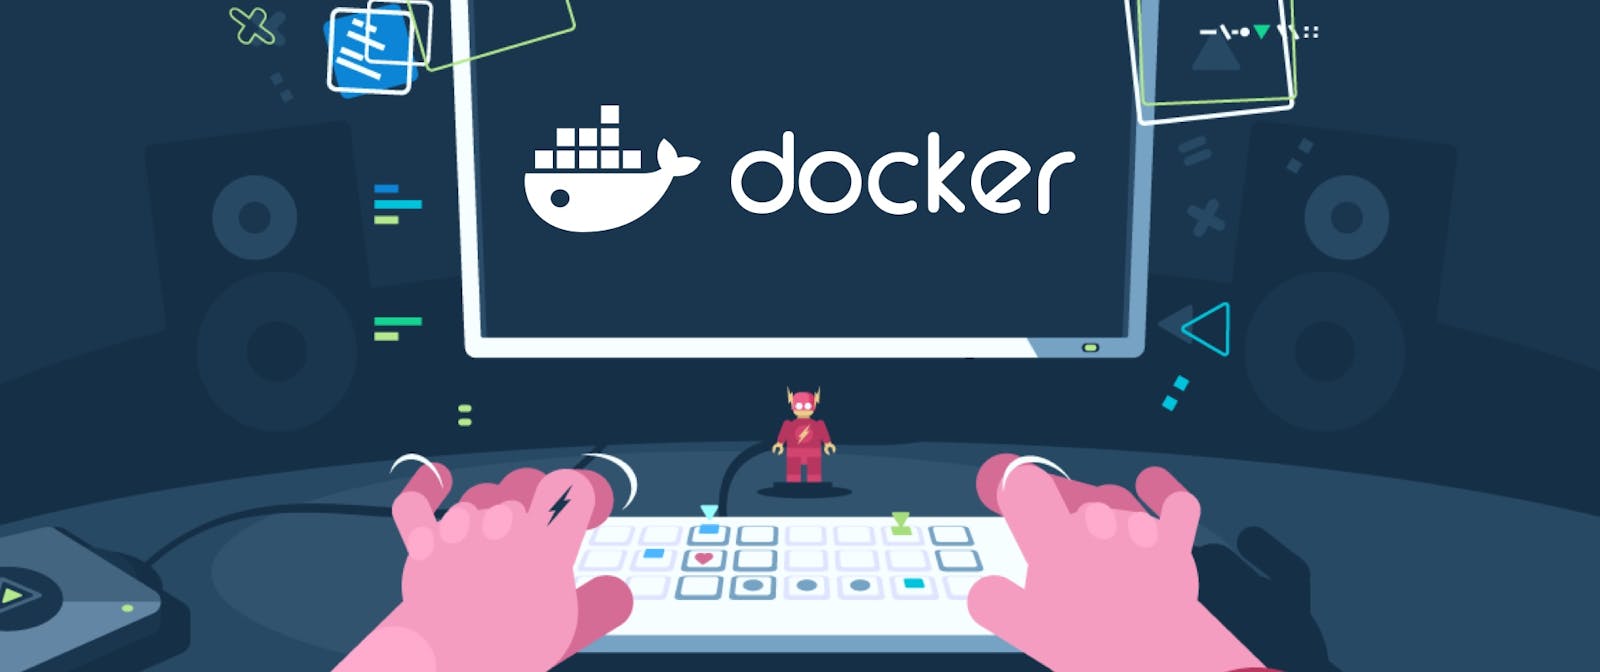 20 Docker commands use cases for developers